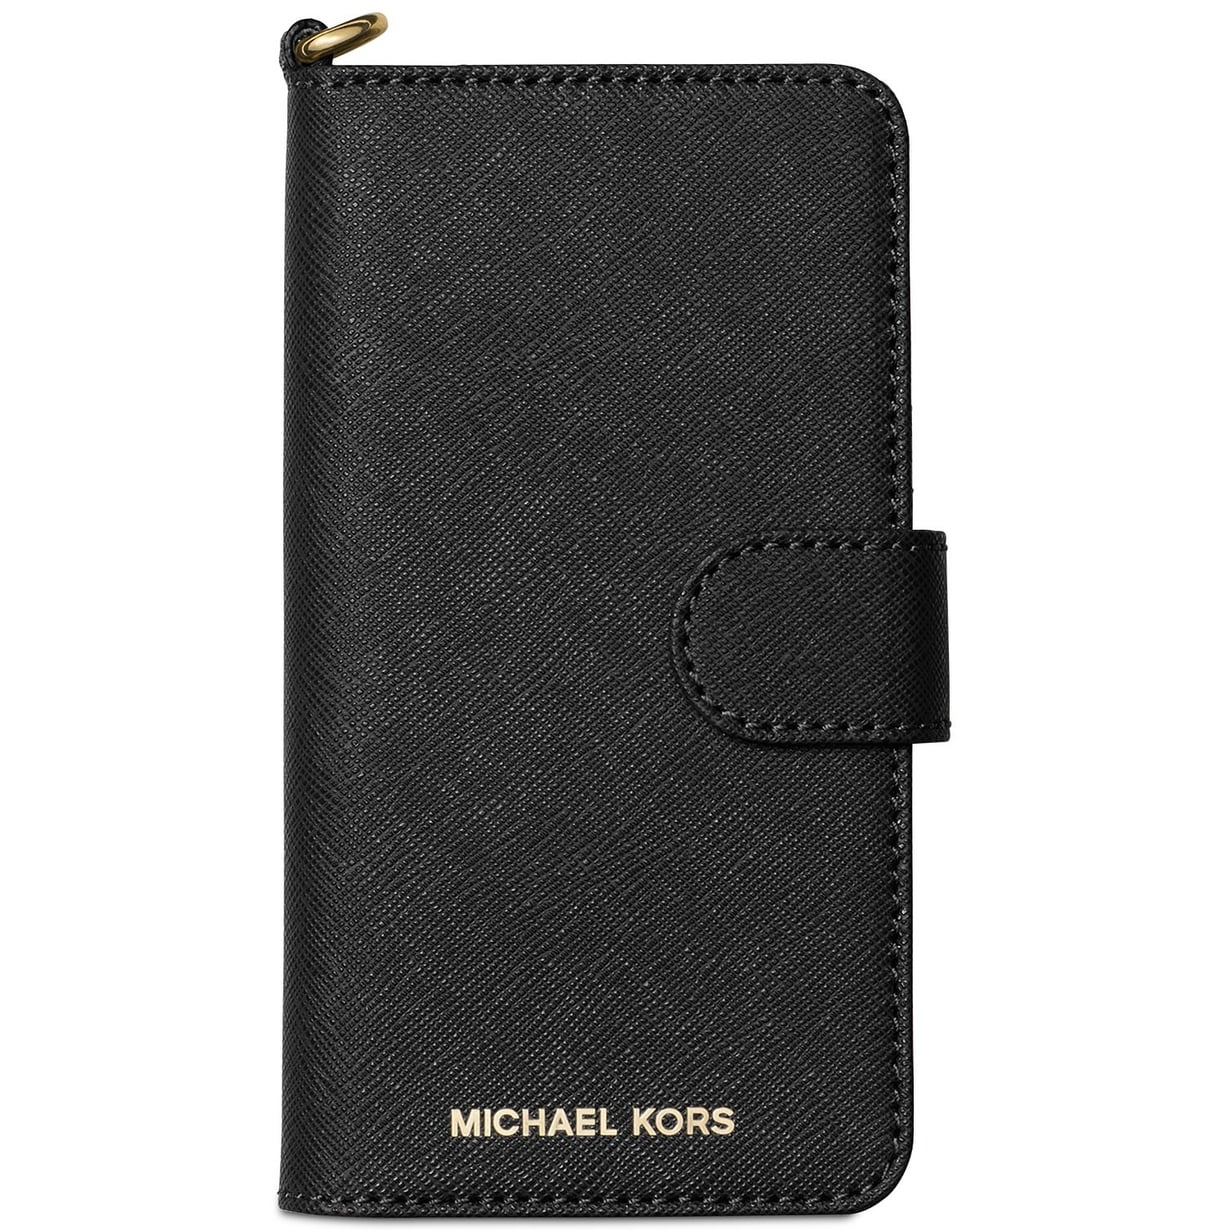 michael kors iphone 8 case